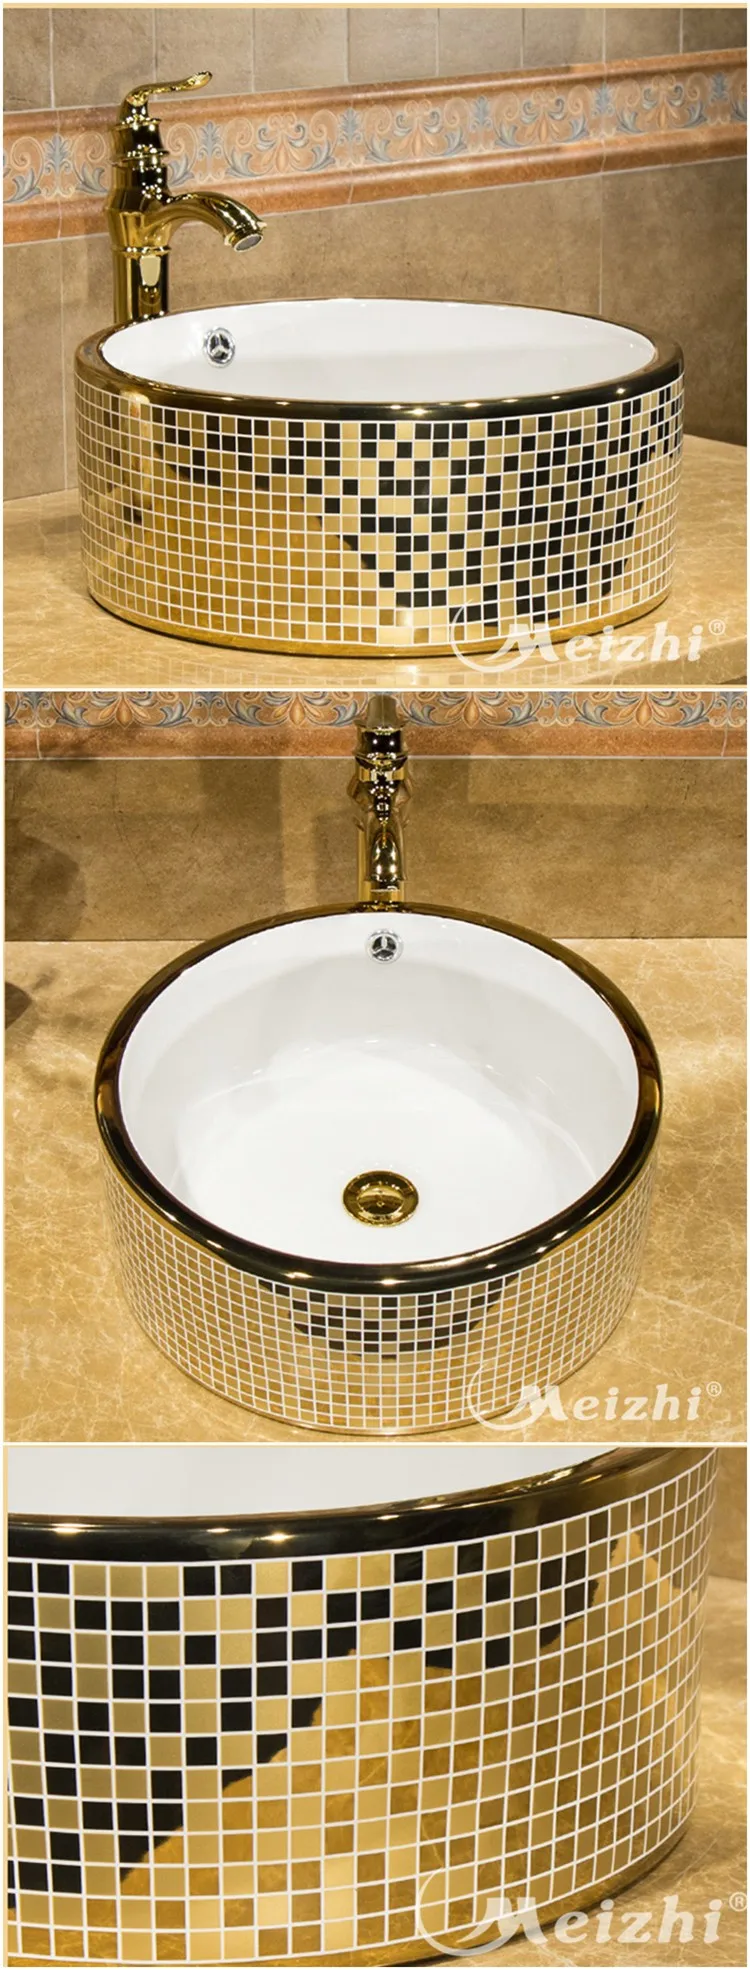 New Italian classic design wash hand basin